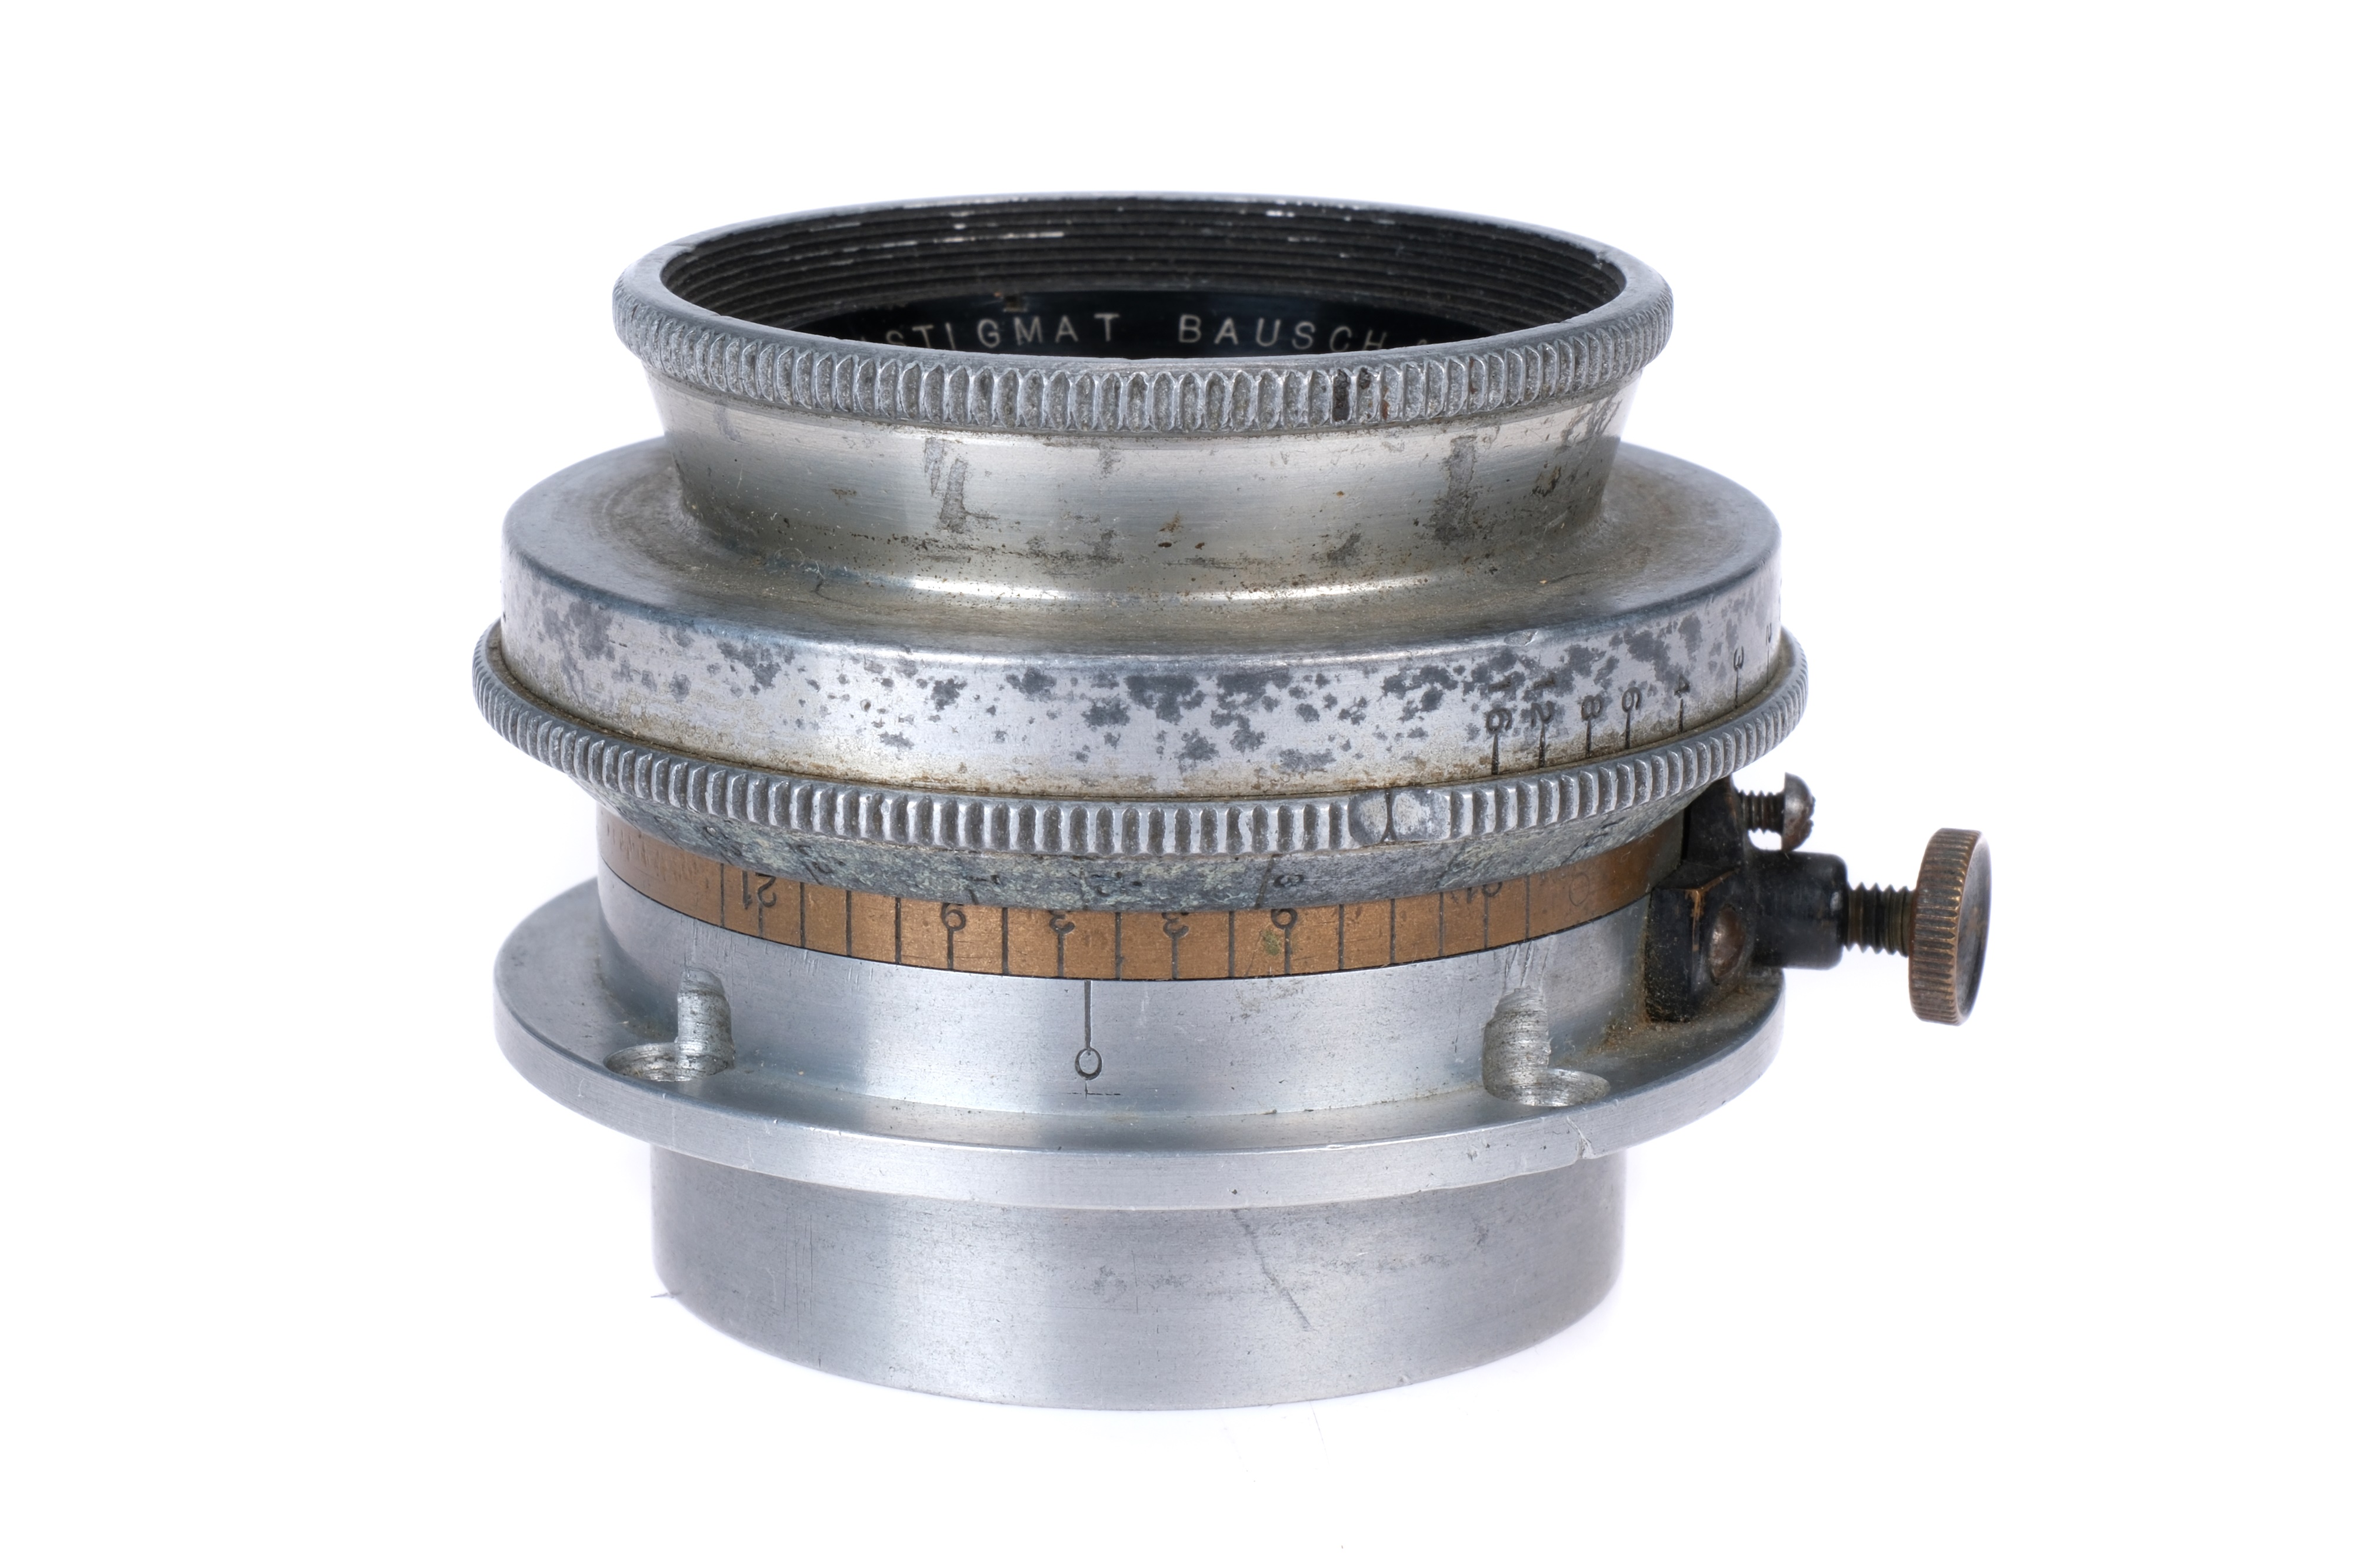 A Bausch & Lomb Anastigmat f/2.7 75mm Lens,